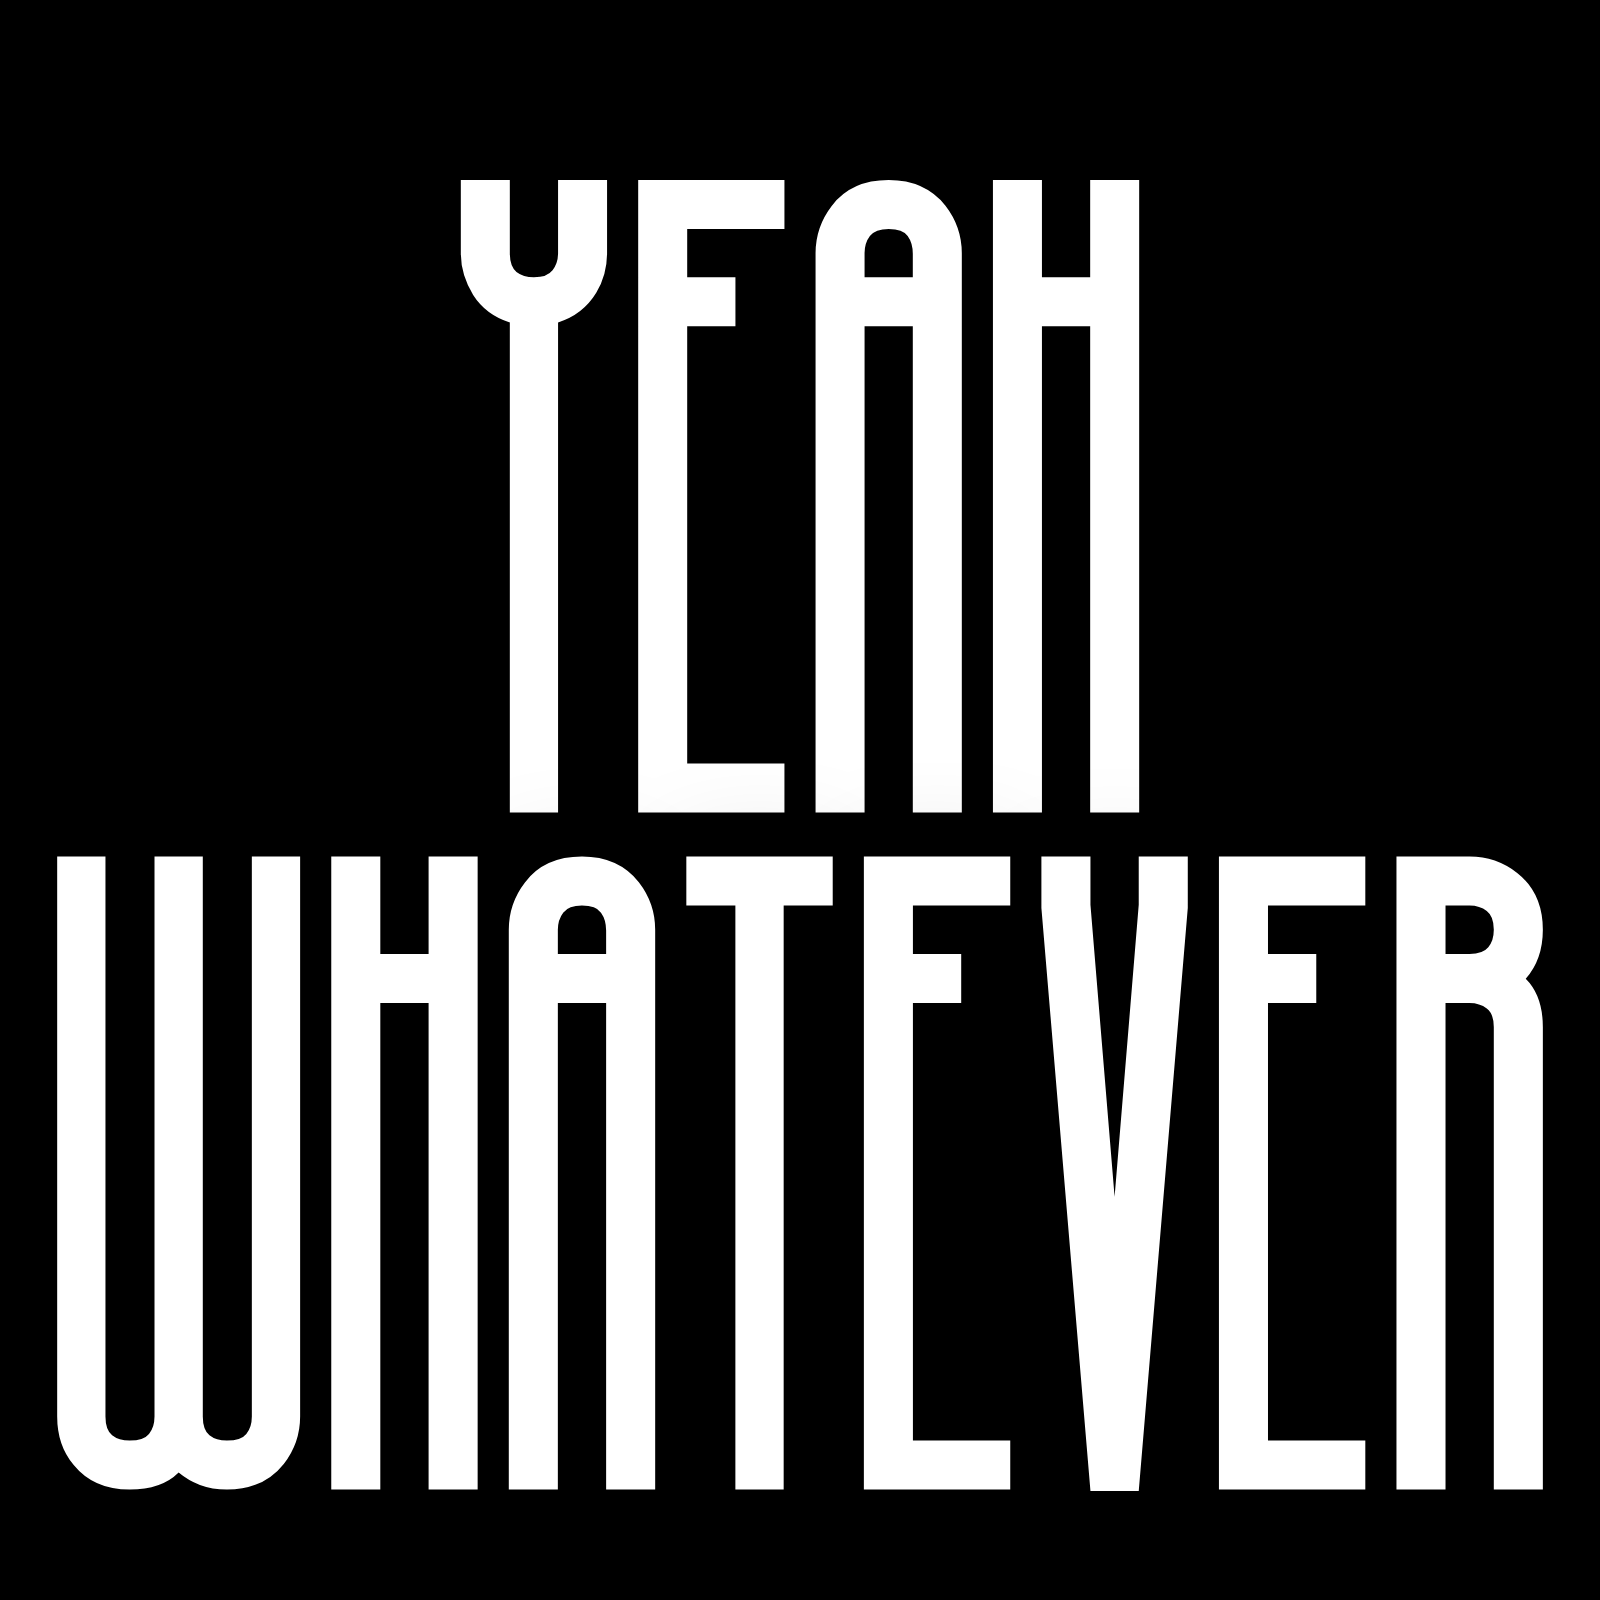 Yeah Whatever Sweatshirt - Ken Adams